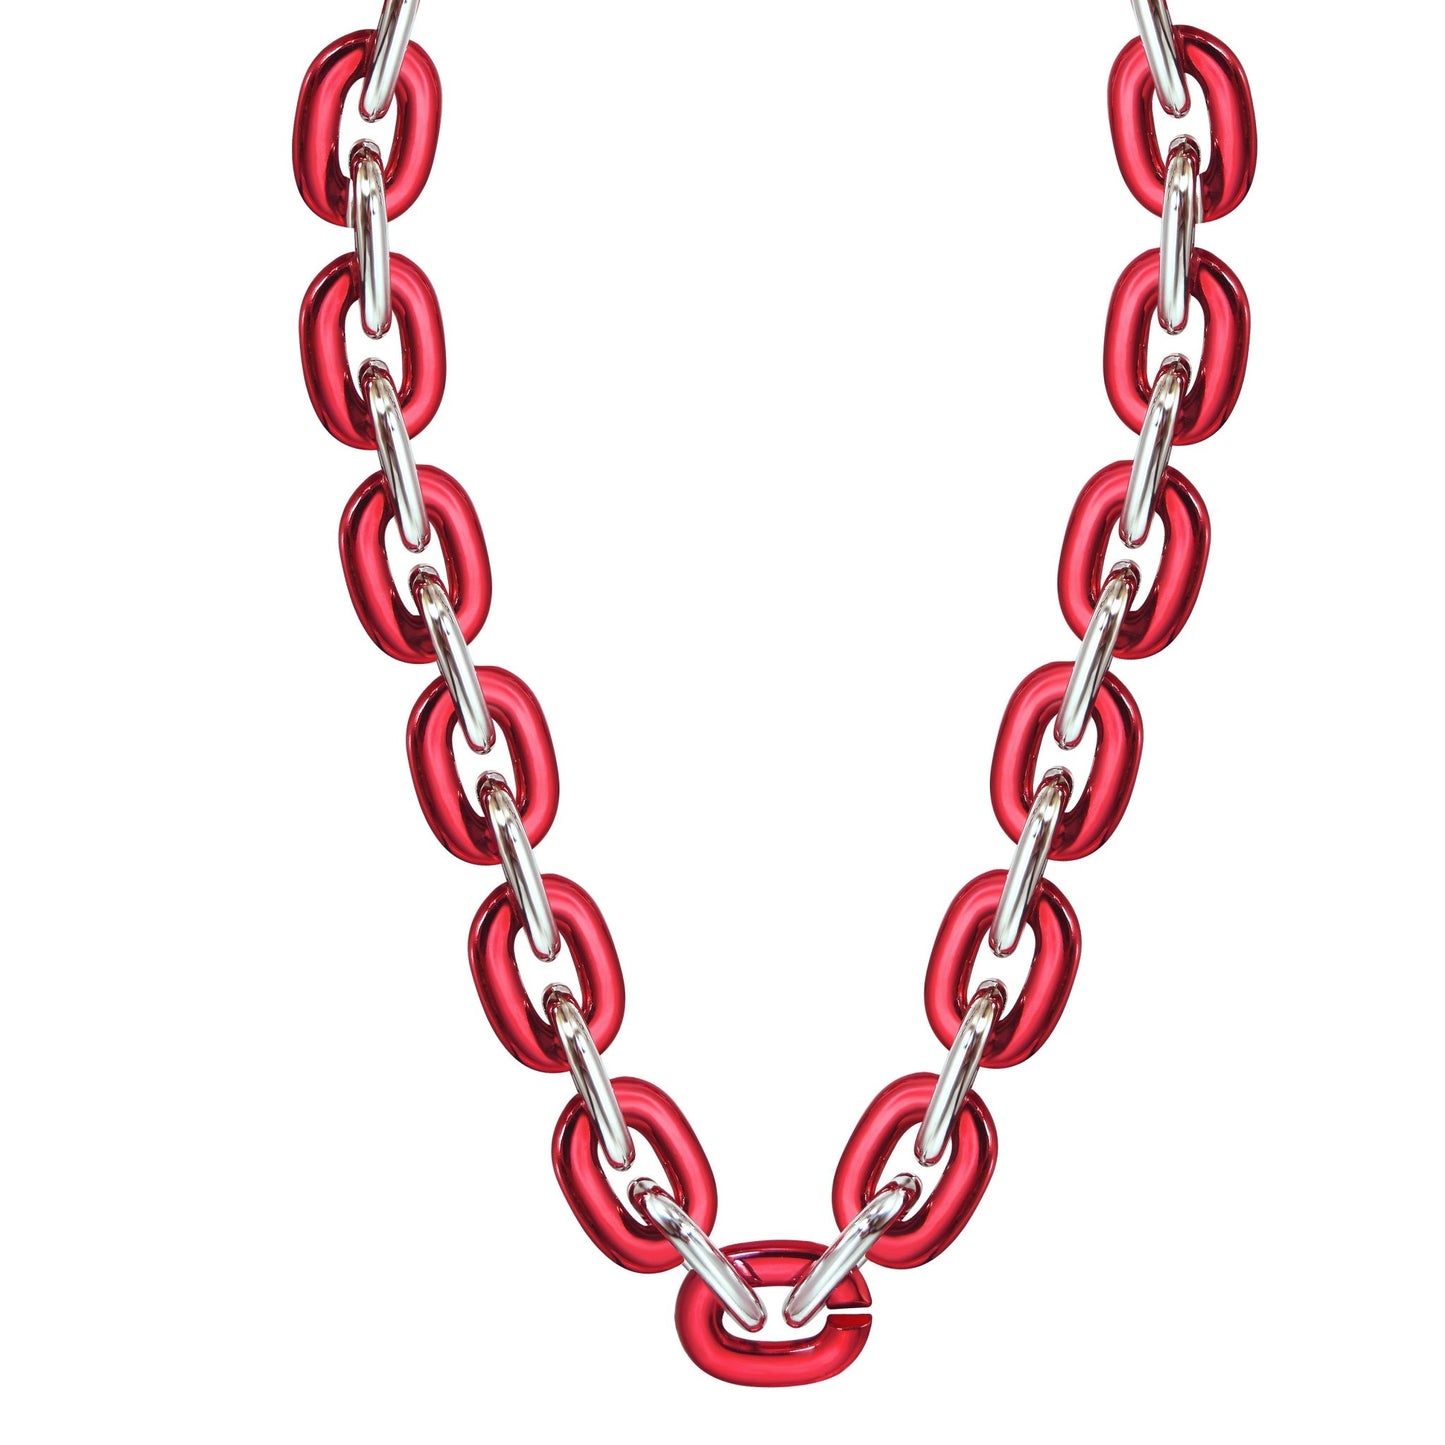 Jumbo Fan Chain Necklace - Gamedays Gear - Red / Silver